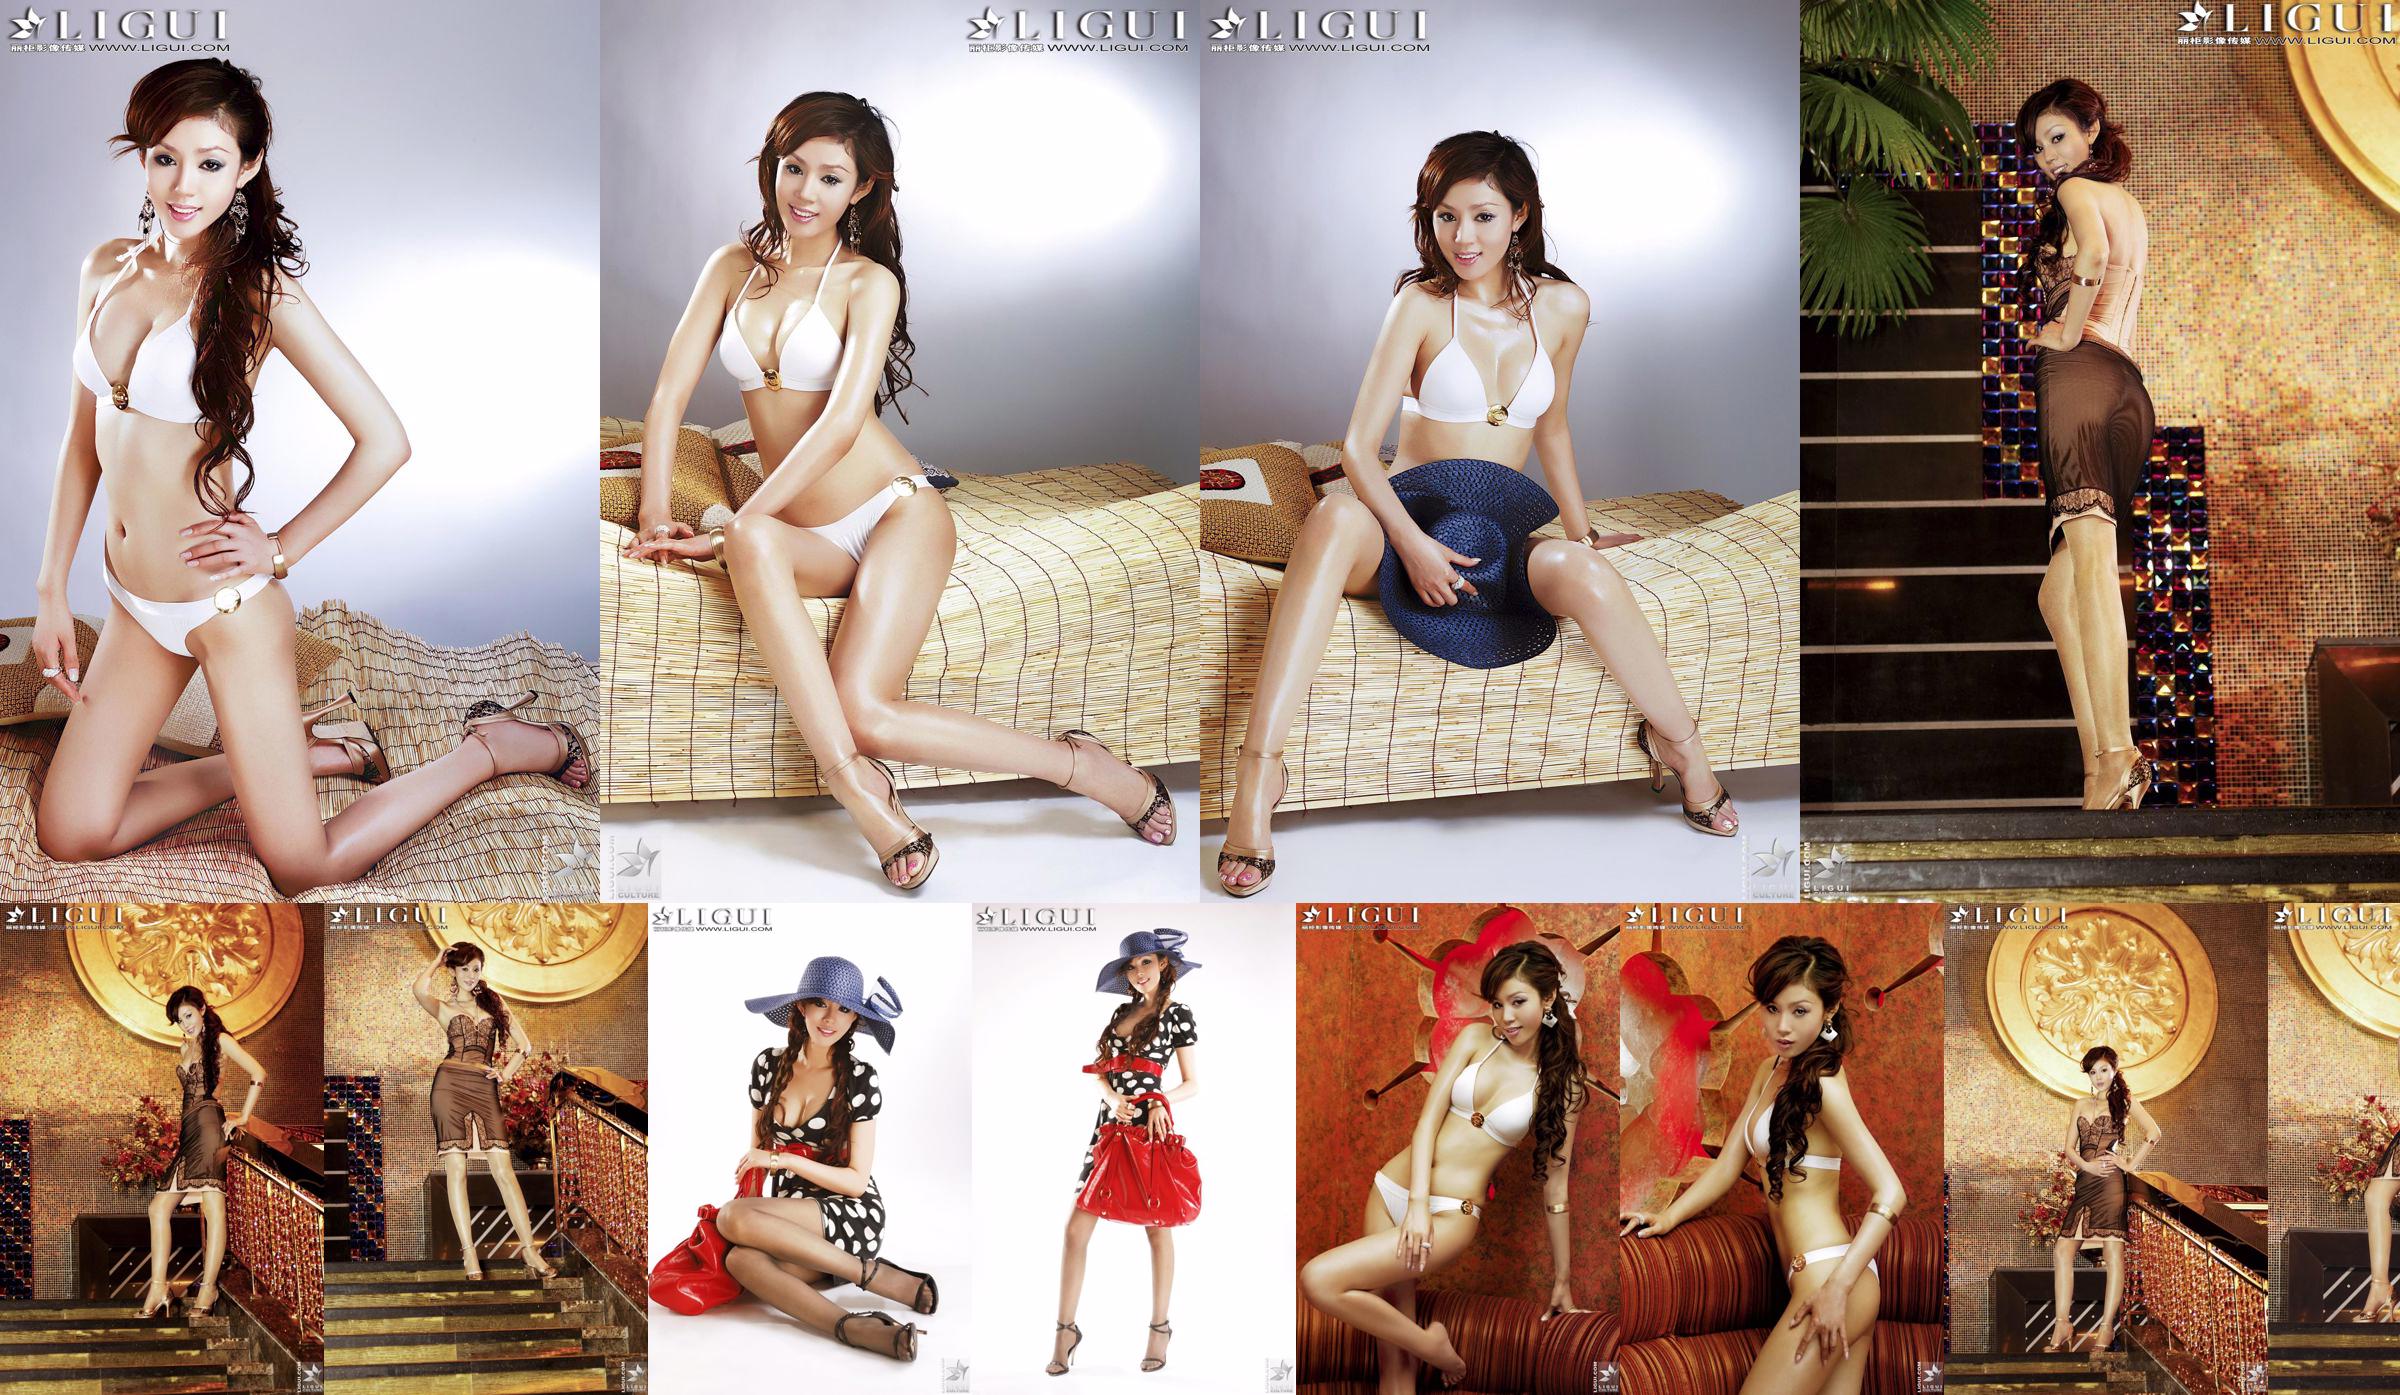 [丽 柜 LiGui] "Bikini + Robe" du modèle Yao Jinjin, belles jambes et pieds soyeux Photo Picture No.082bf4 Page 25